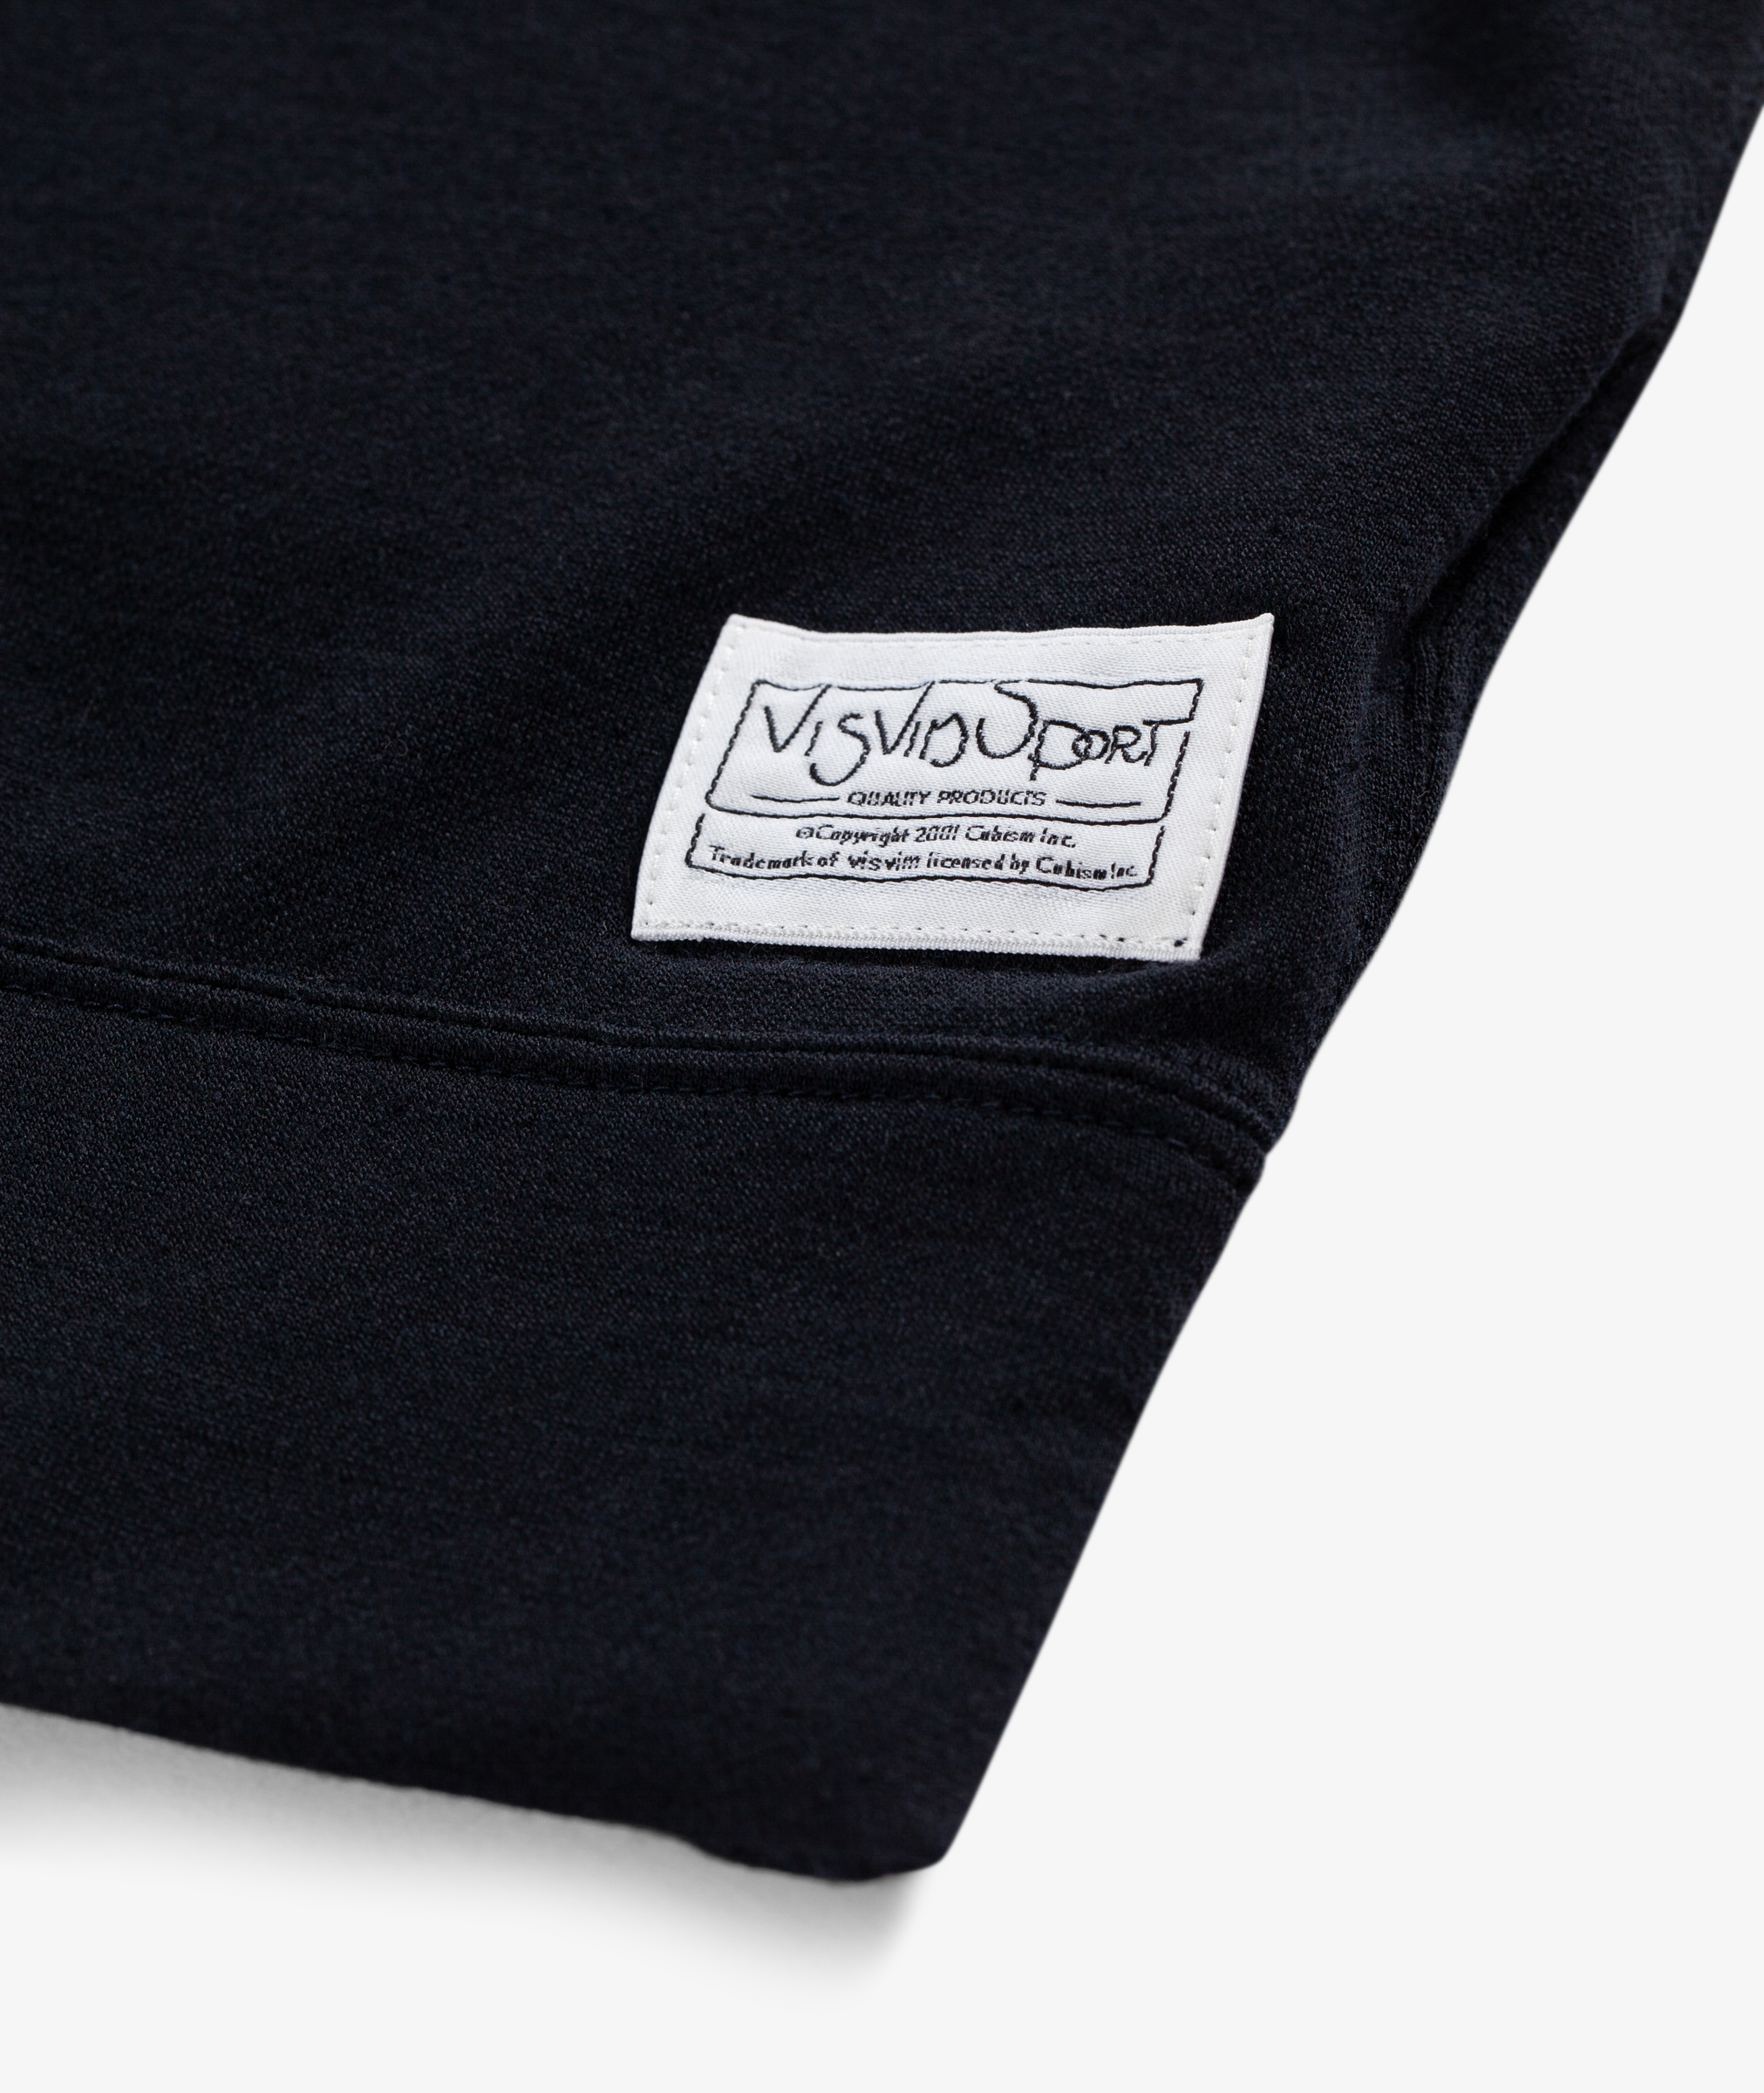 Norse Store | Shipping Worldwide - Sweatshirts - VISVIM SPORT - VS 